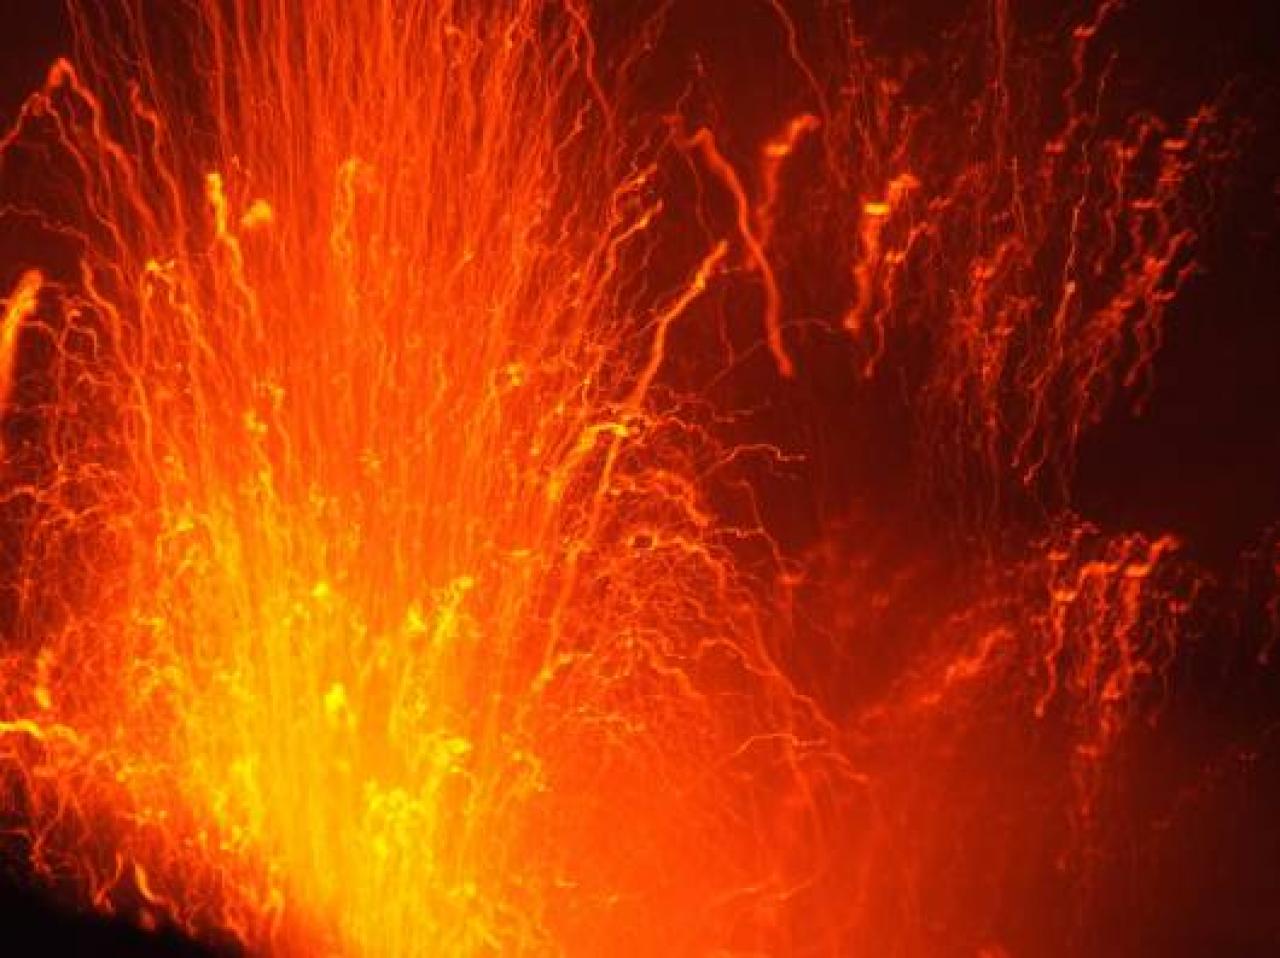 Etna in eruzione, esplosioni e fontane di lava dal cratere di sudest in un'immagine di archivio